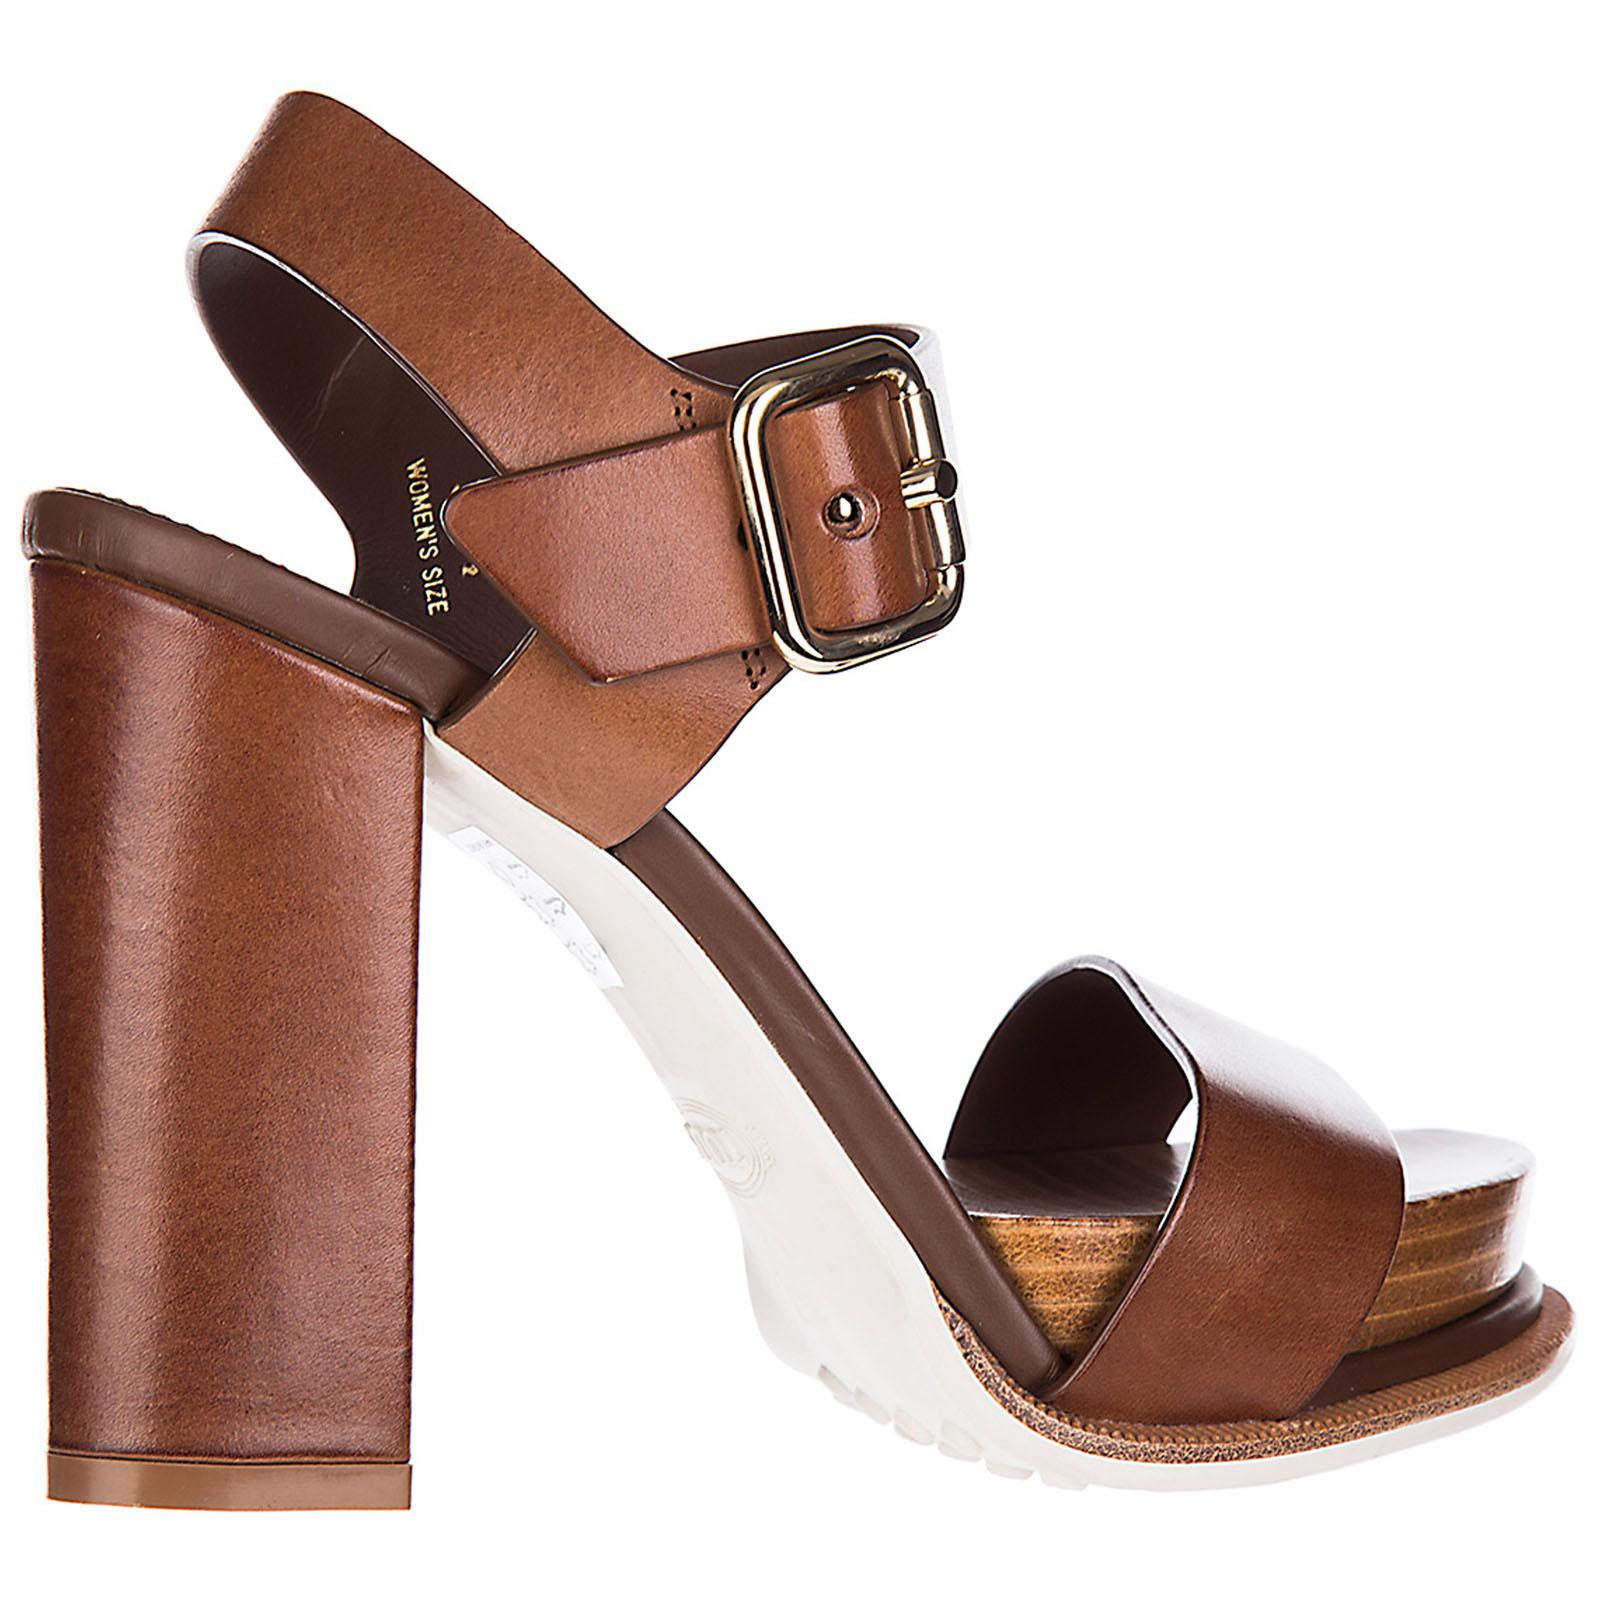 Tod's Women's Leather Heel Sandals in Brown - Lyst